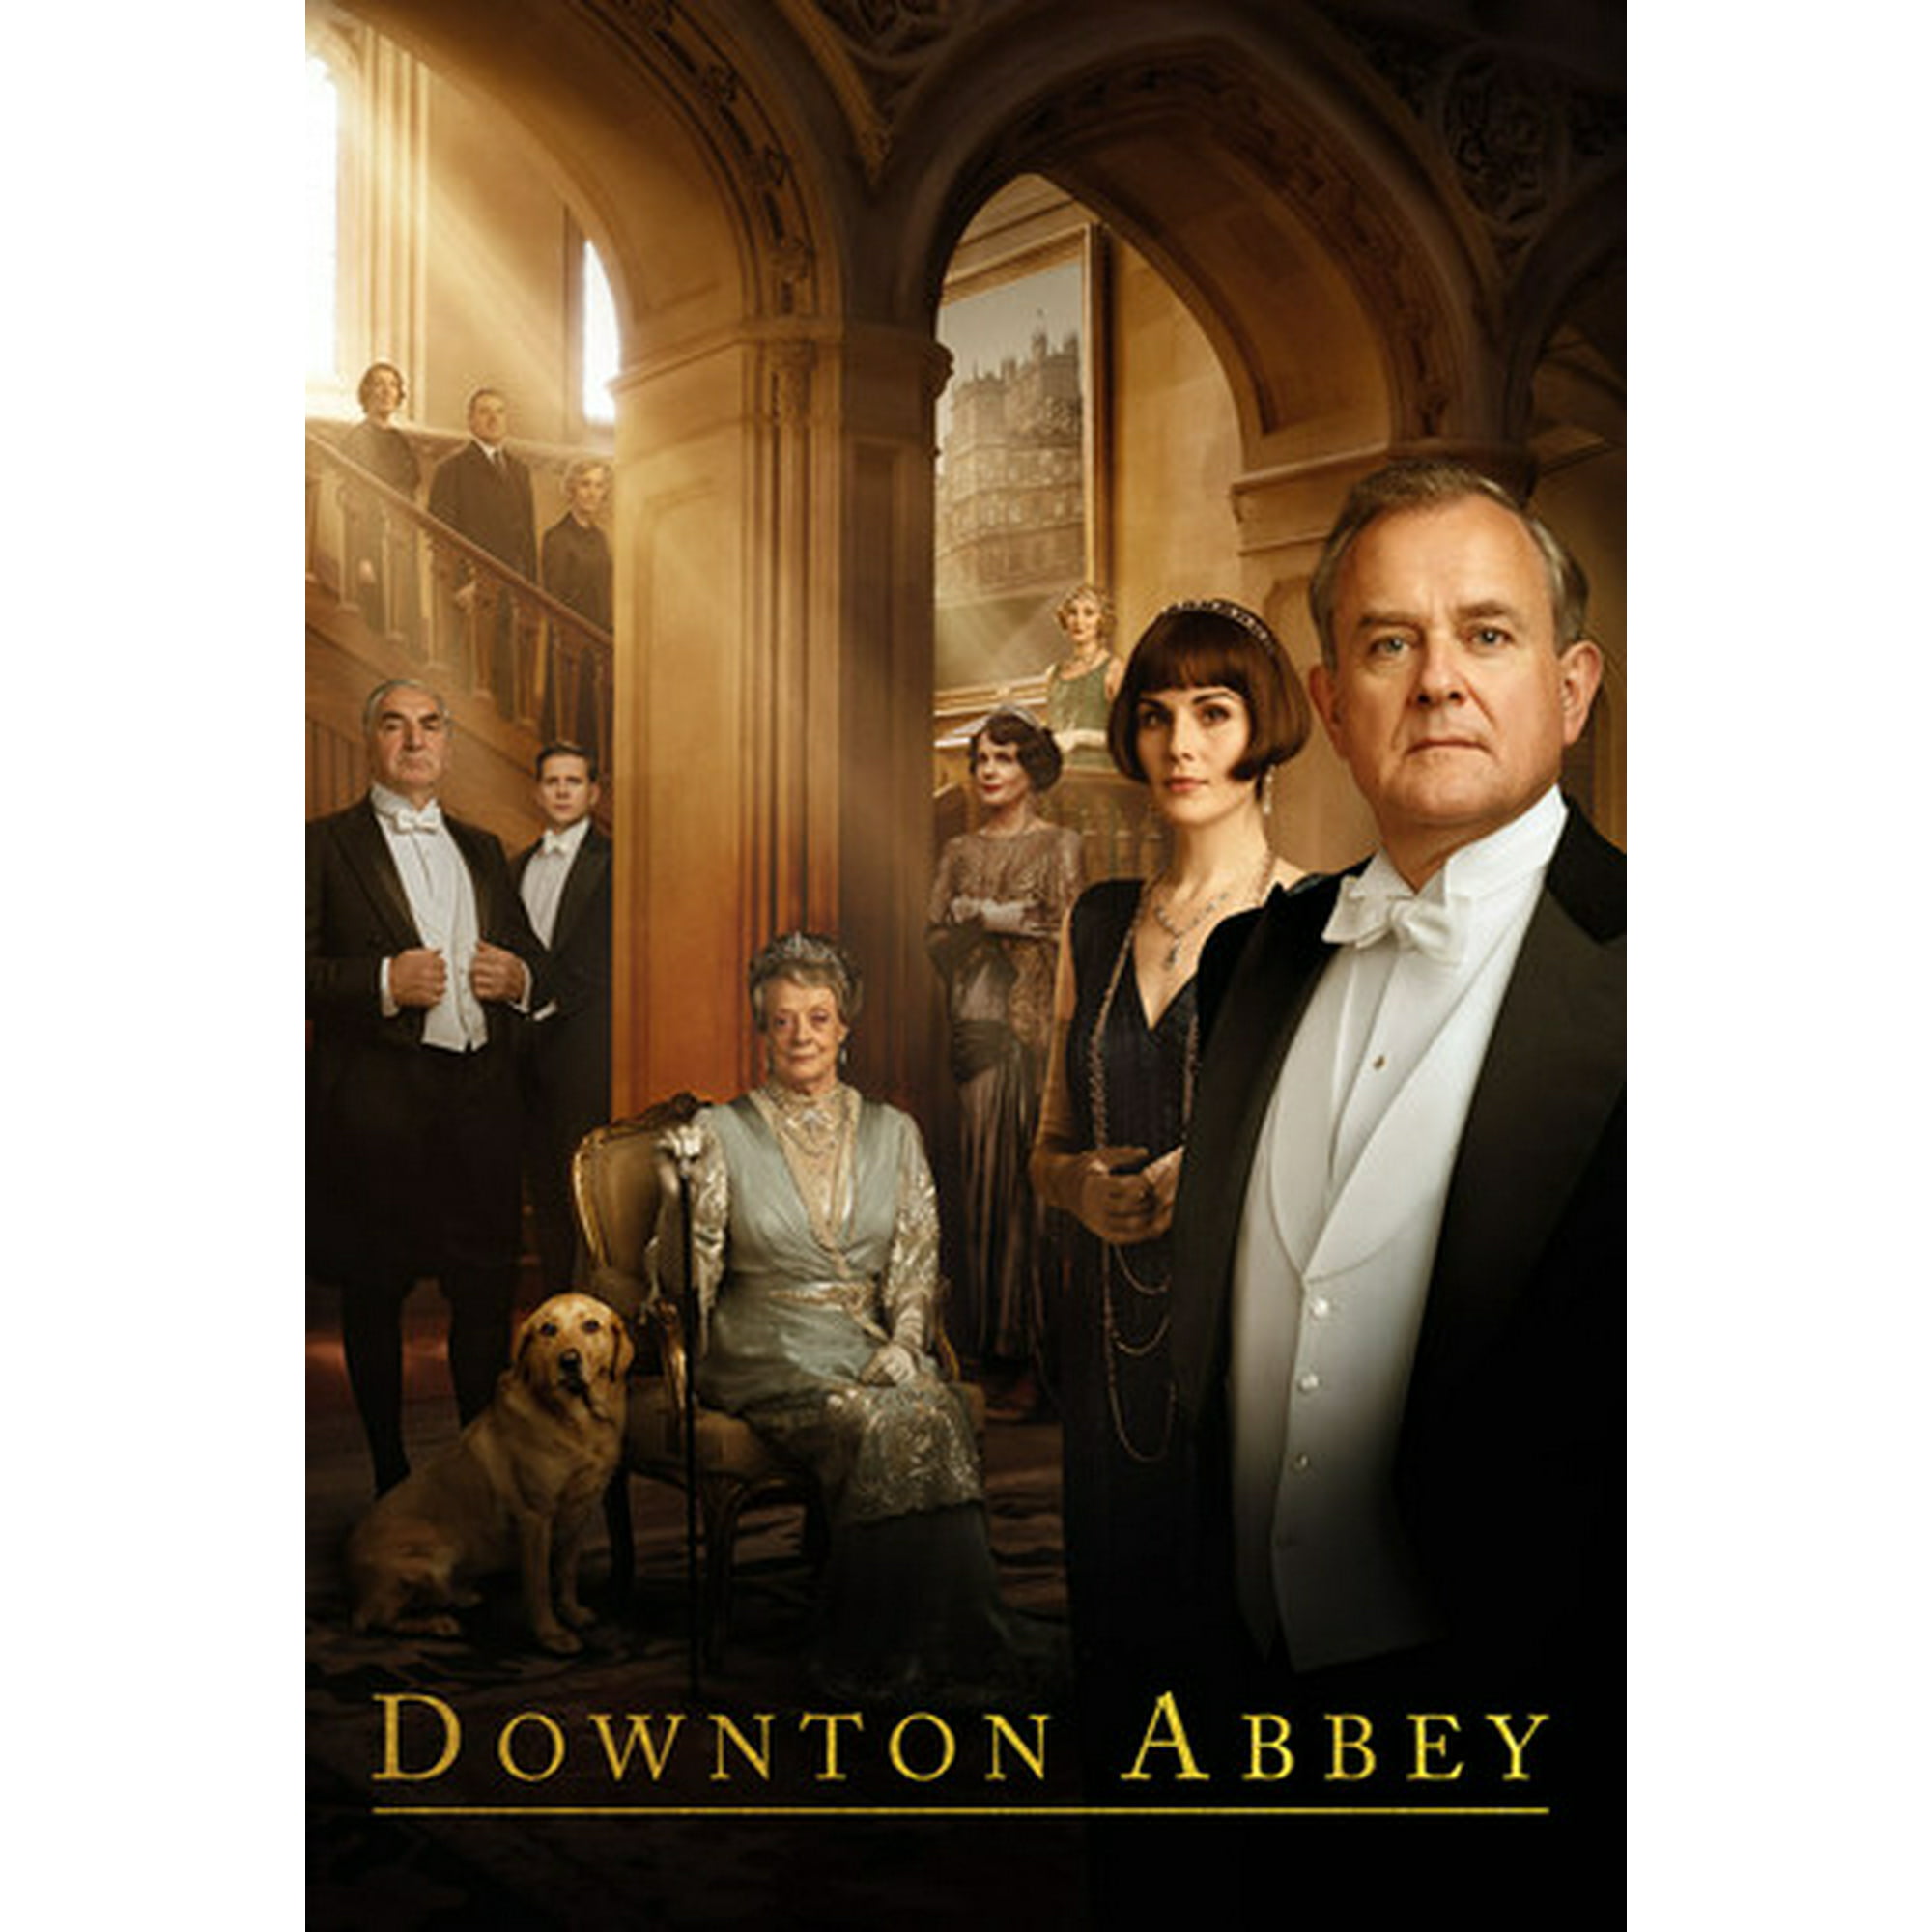 downton abbey season 4 cover art